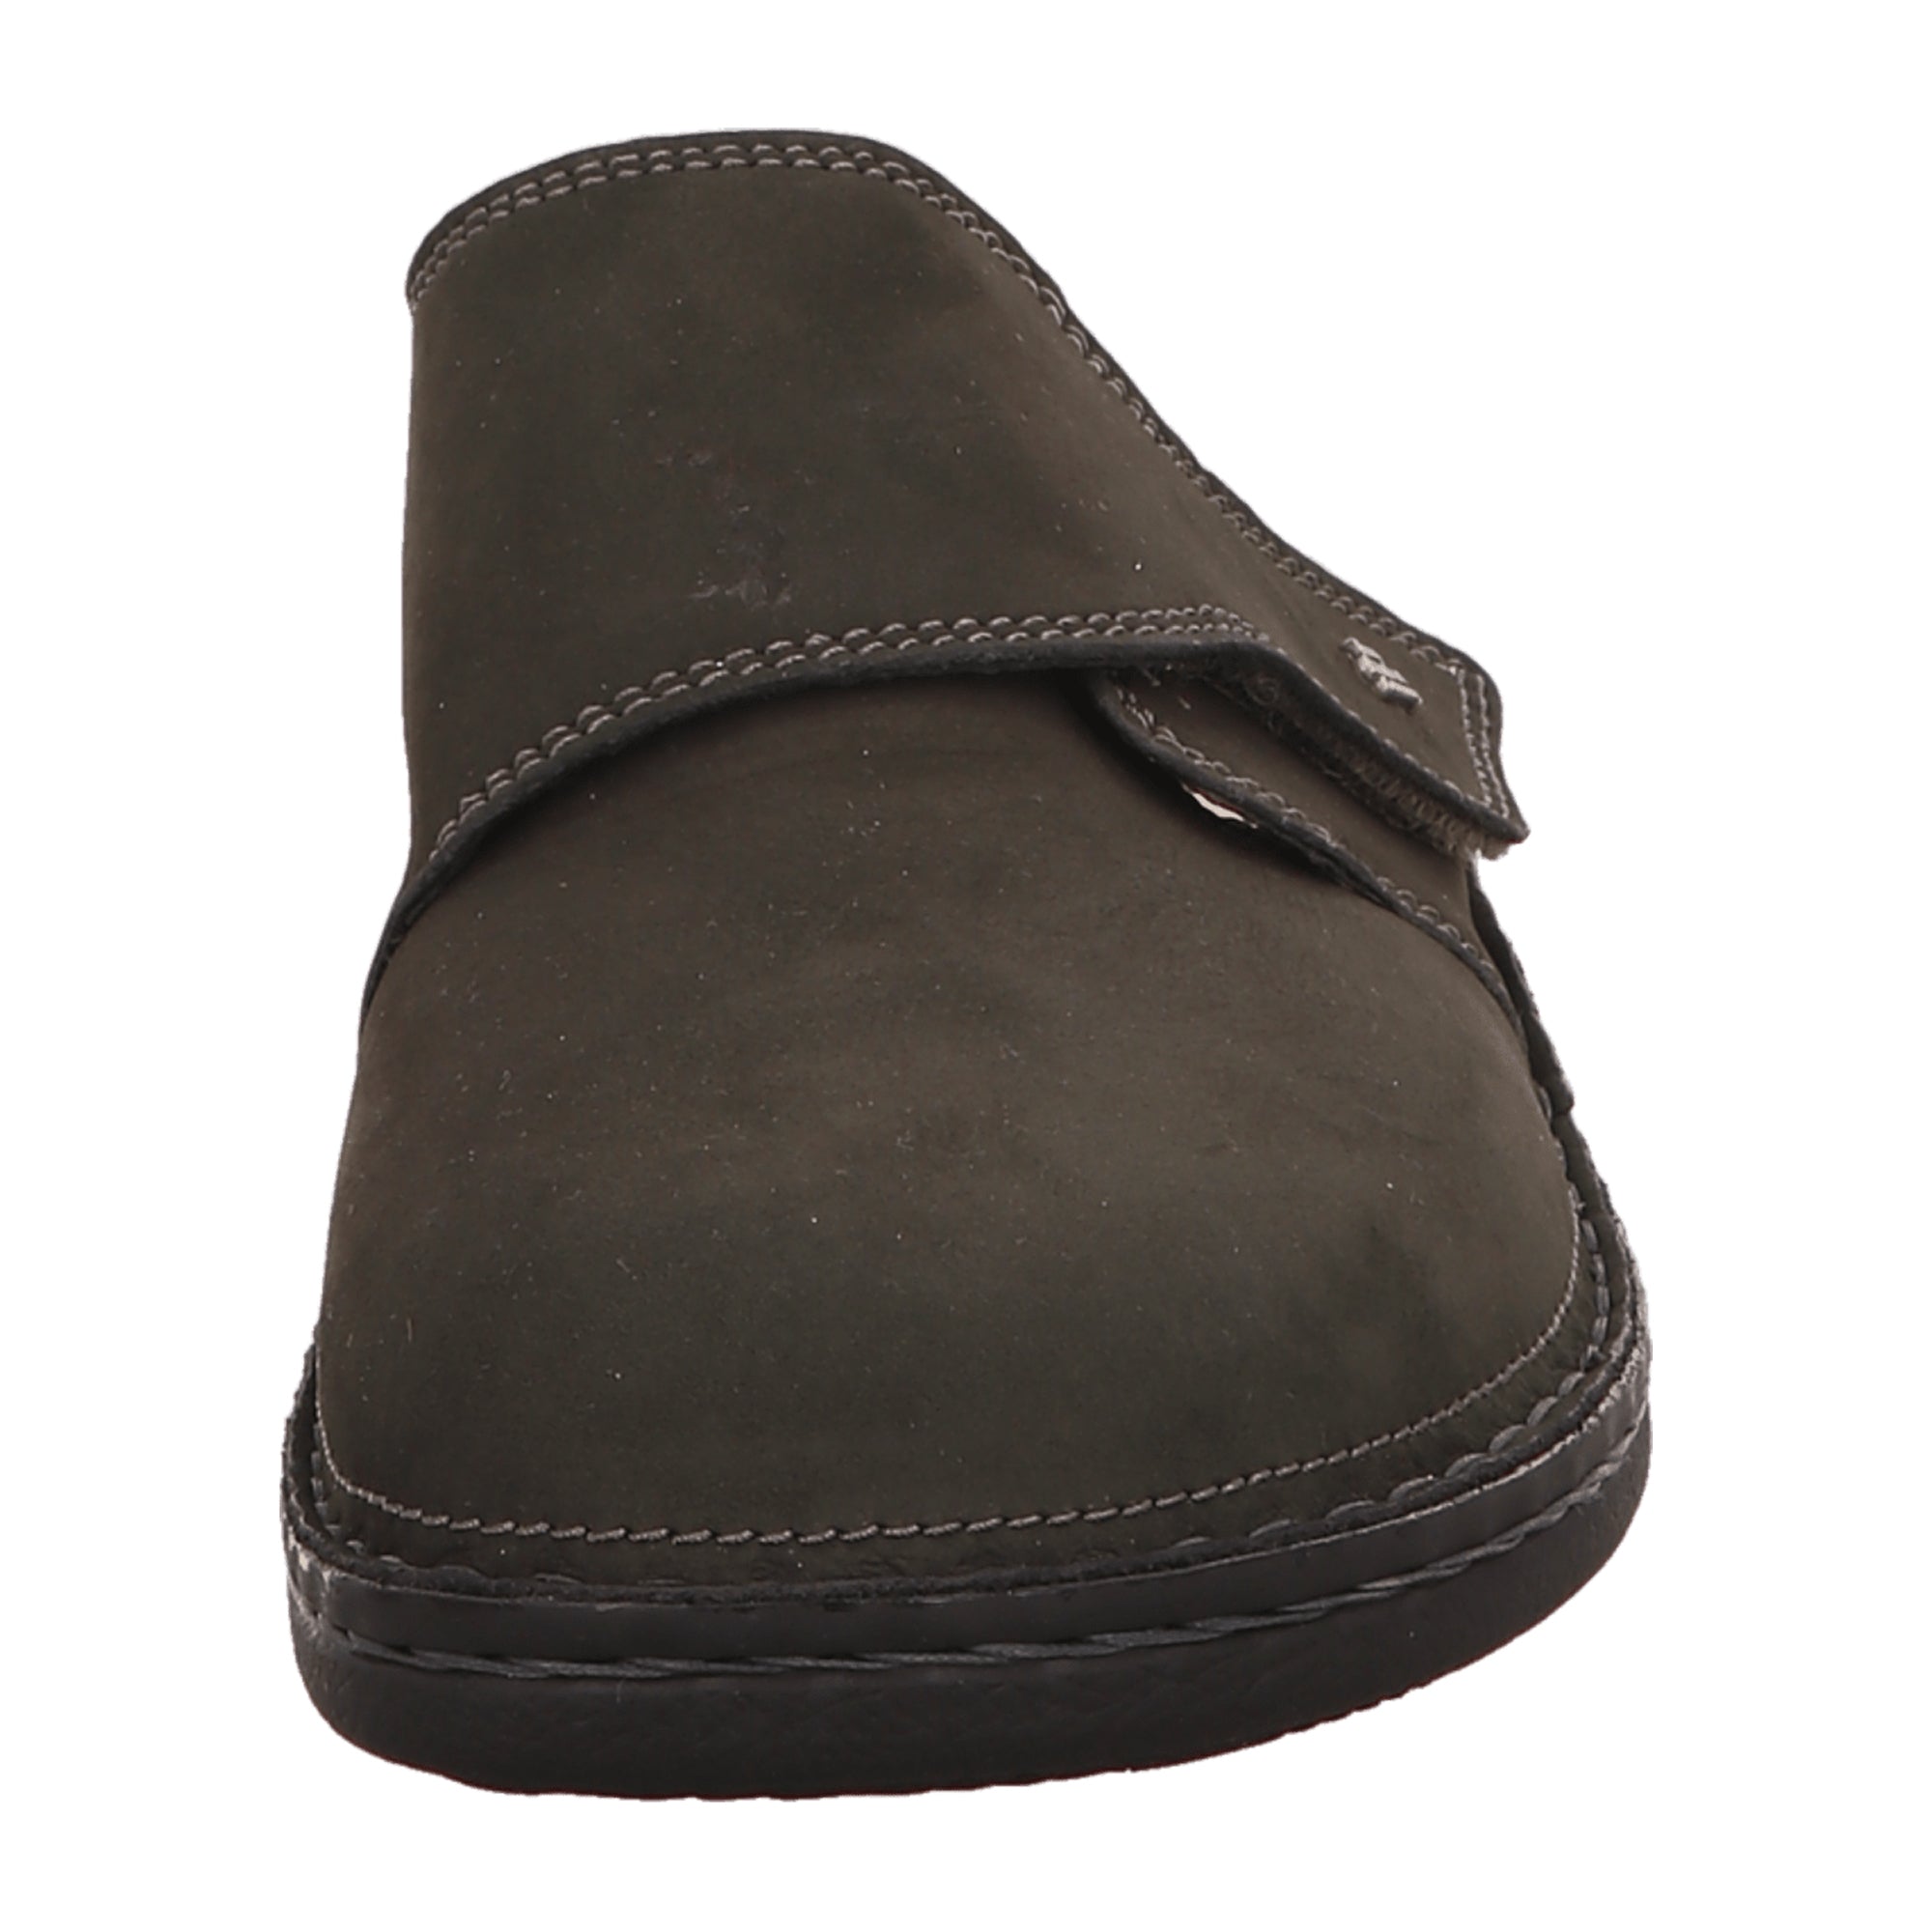 Finn Comfort Men's Comfort Sandals - Durable & Stylish Black Design